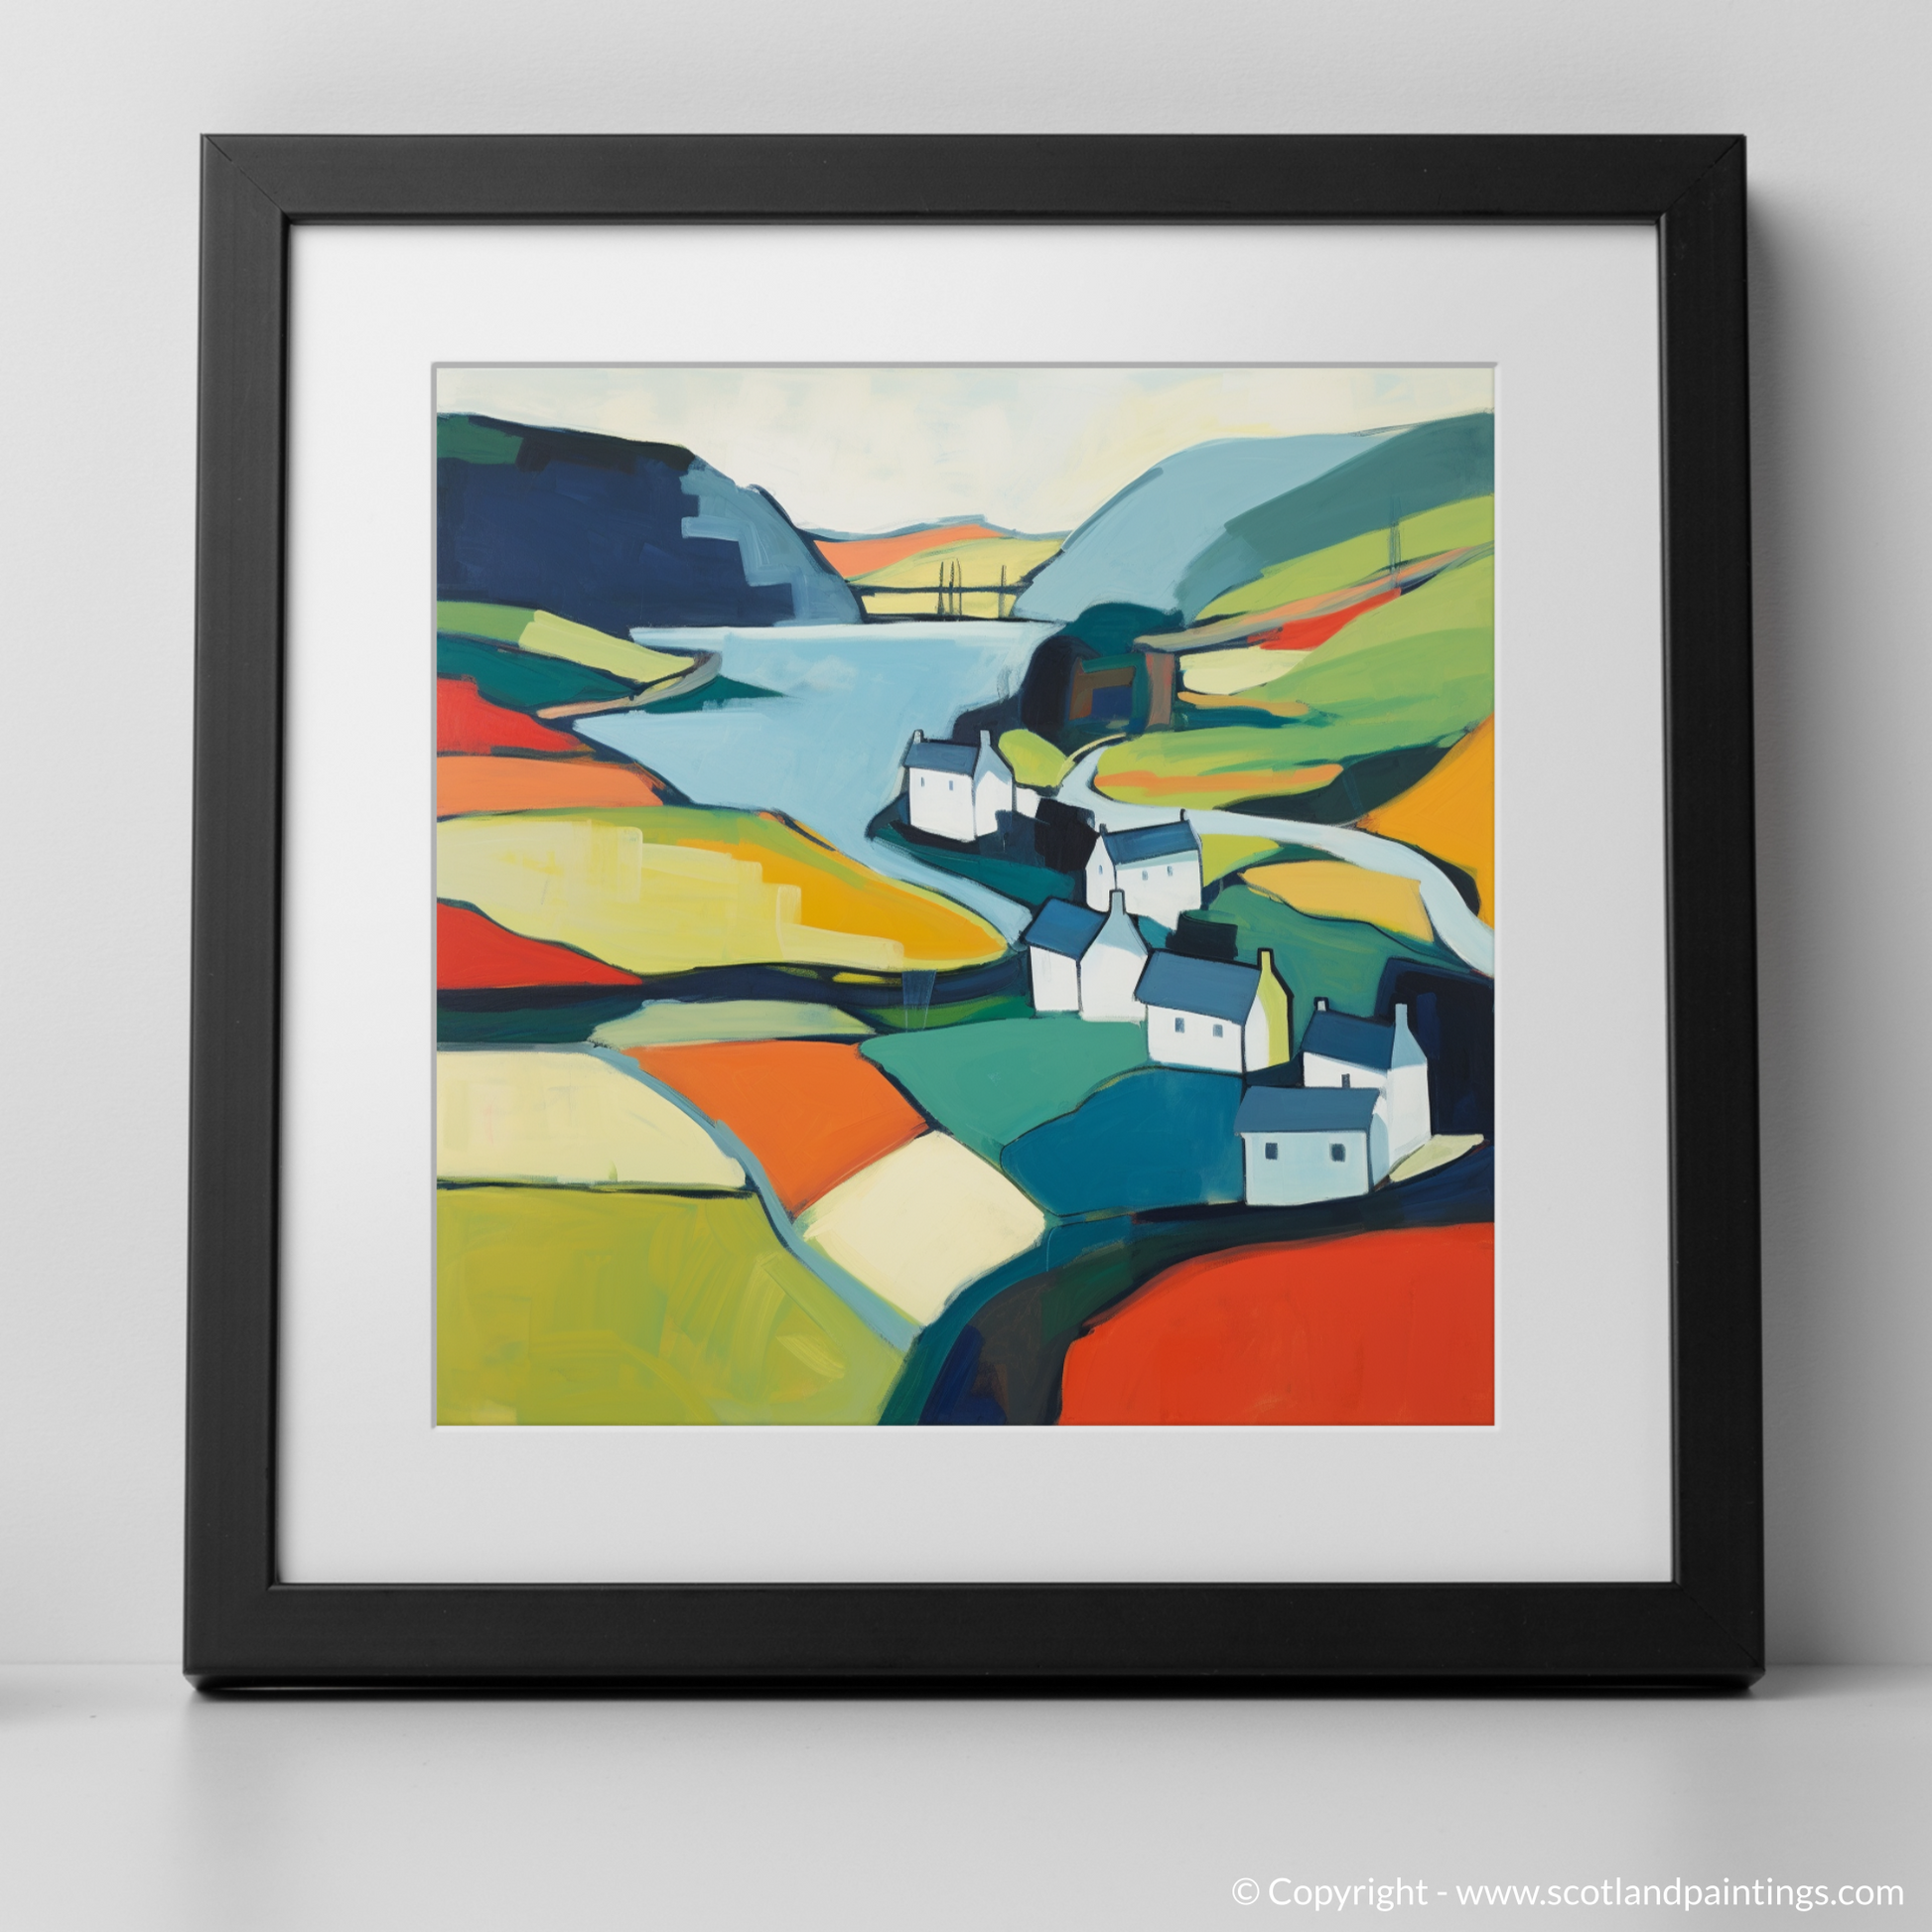 Art Print of Glenmore, Highlands with a black frame